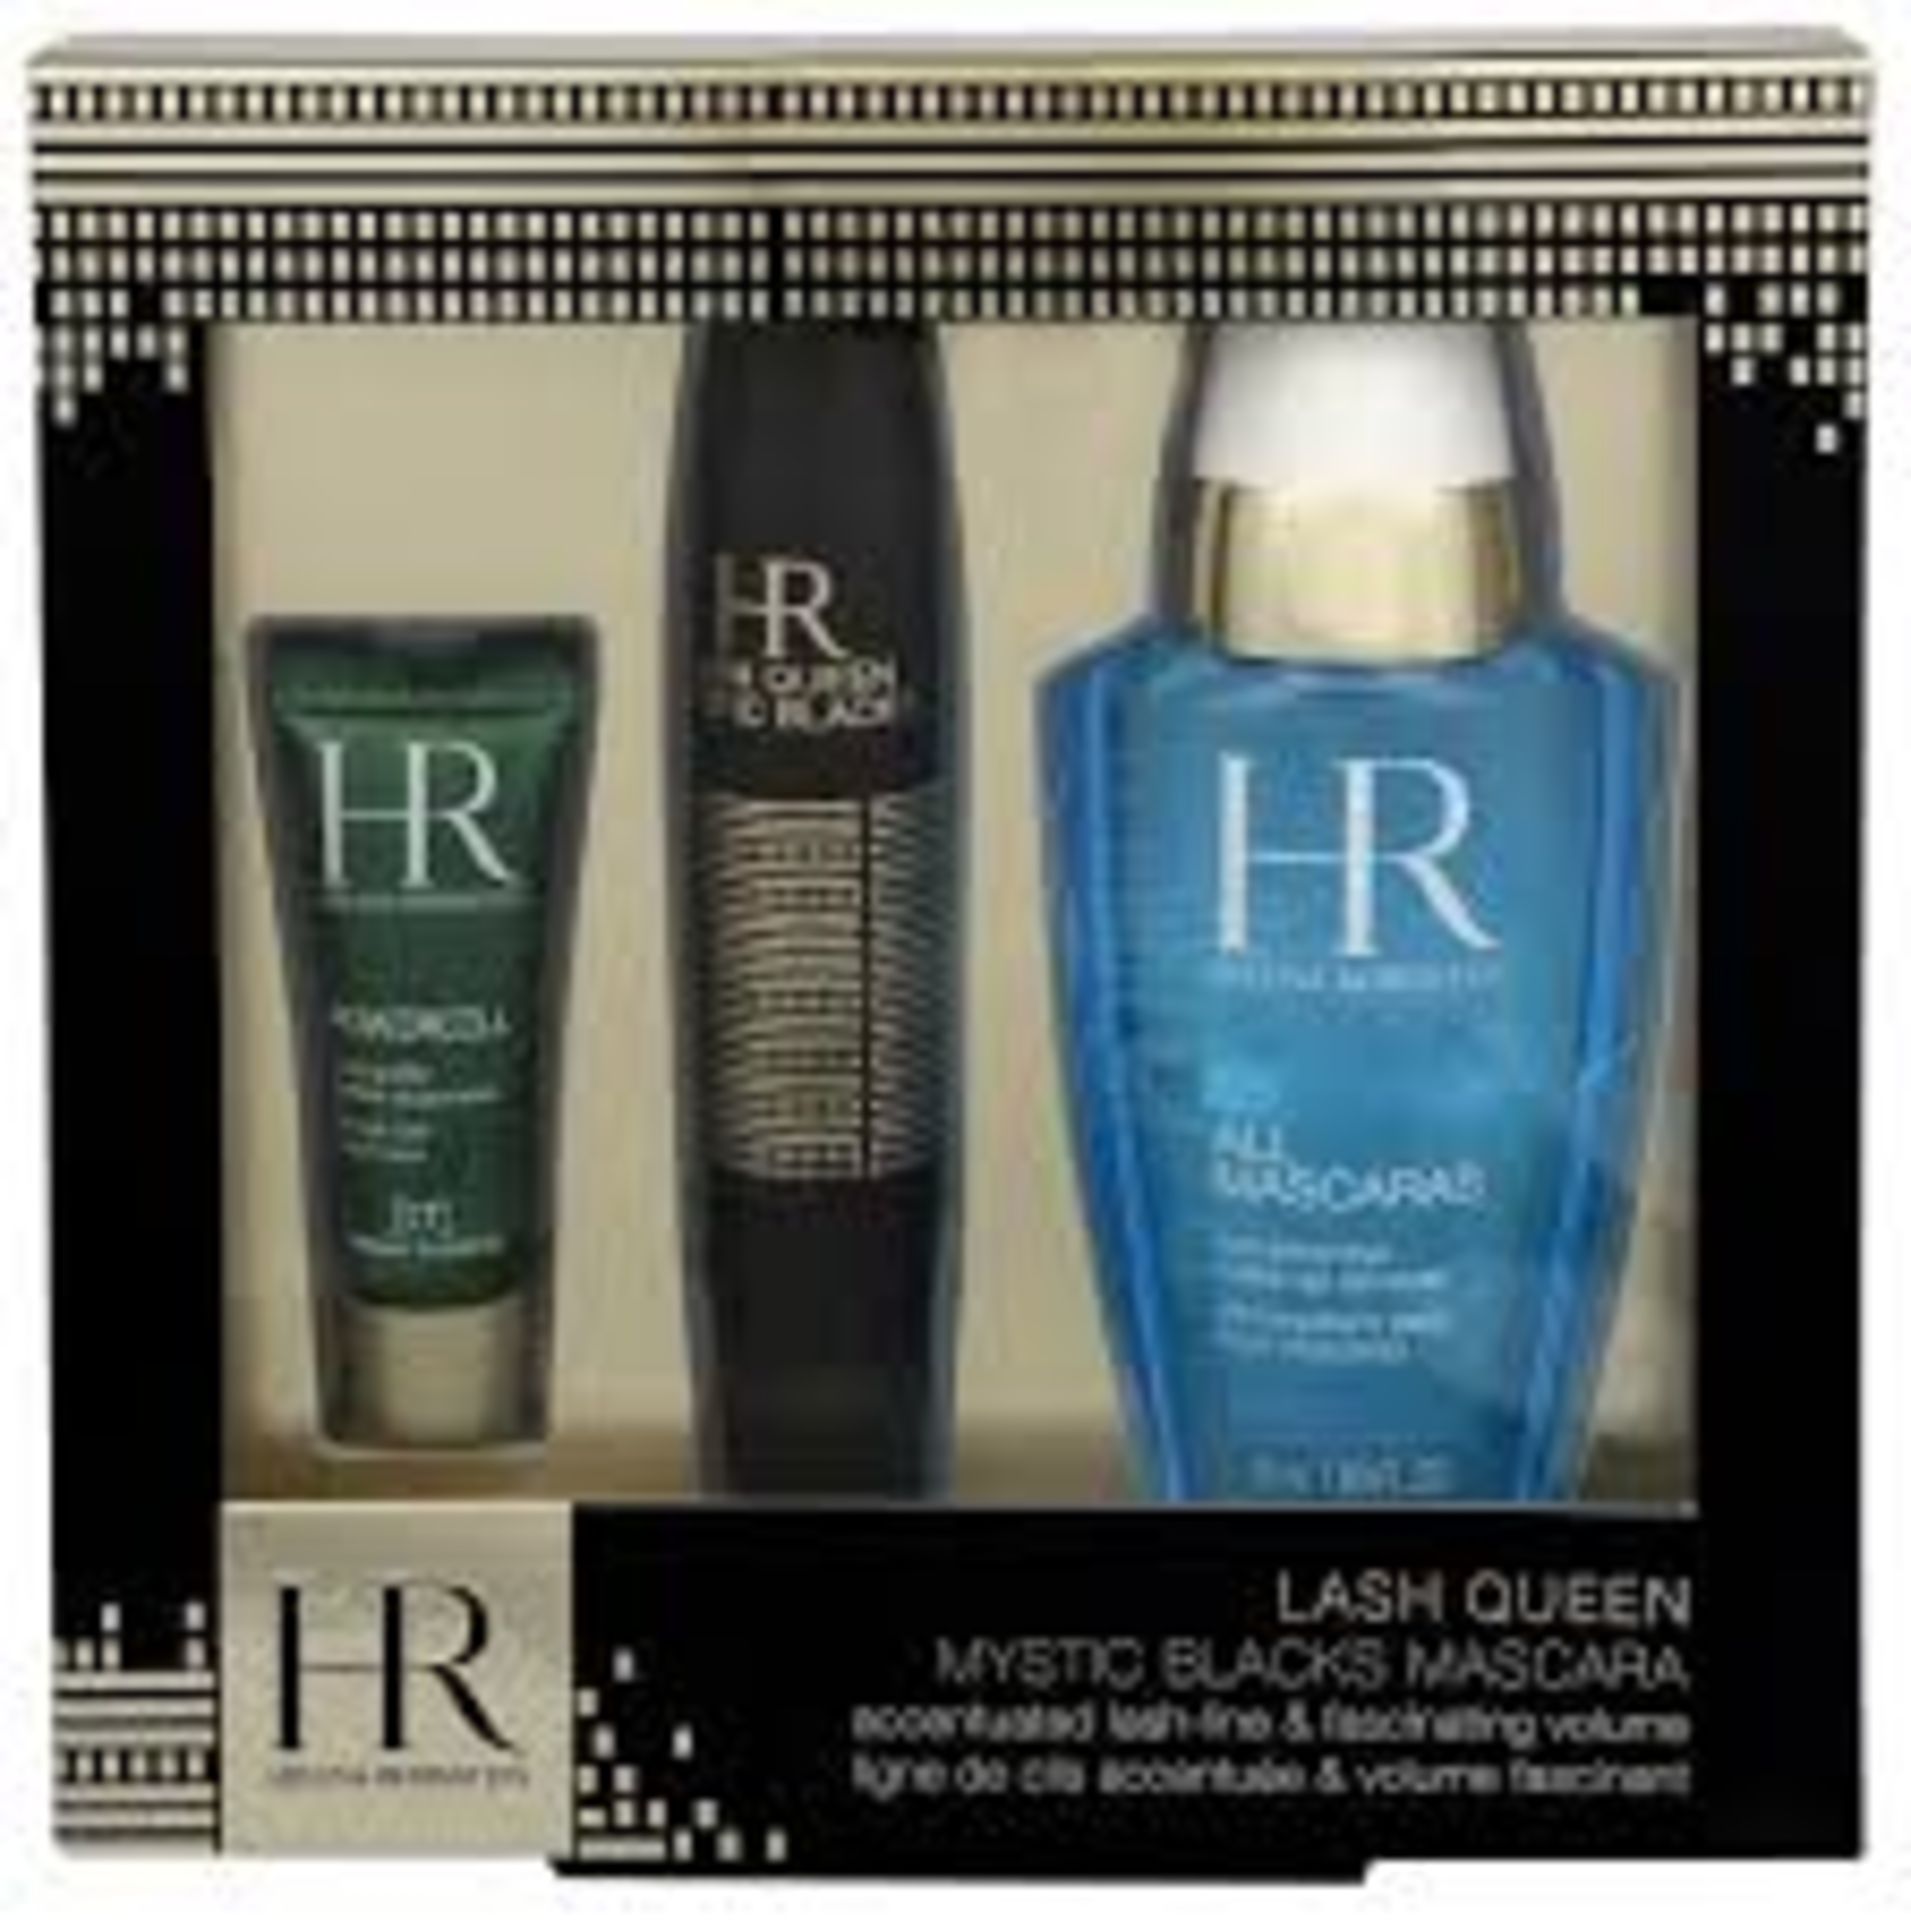 V Brand New Helena Rubenstein Lash Queen Mystic Blacks Mascara Gift Set - Tesco Direct £23.83 X 2